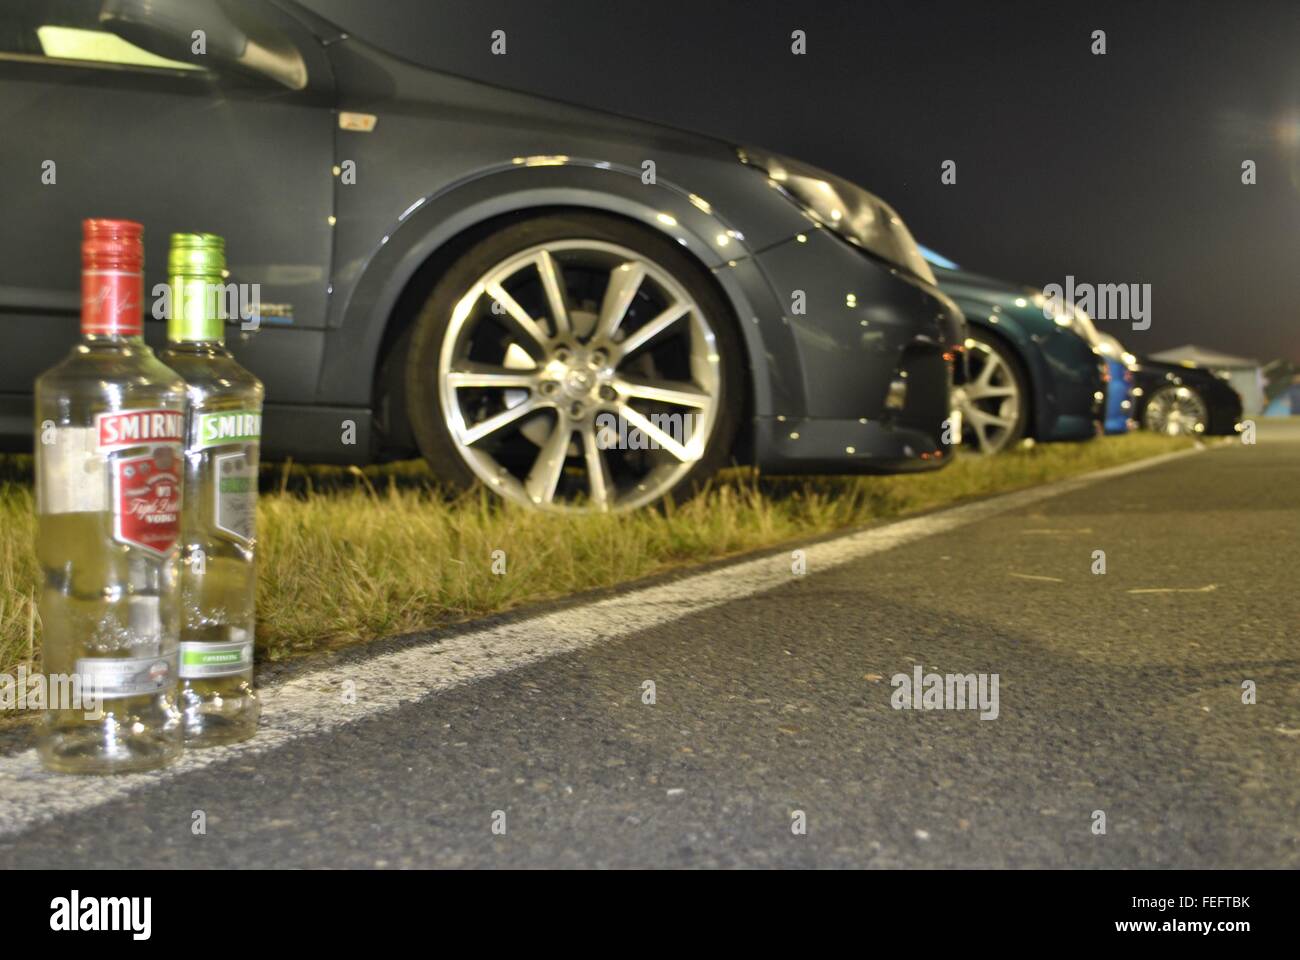 Vauxhall Opel -Treffen Oschersleben Car meeting Party drink sleeping Germany Camping Stock Photo